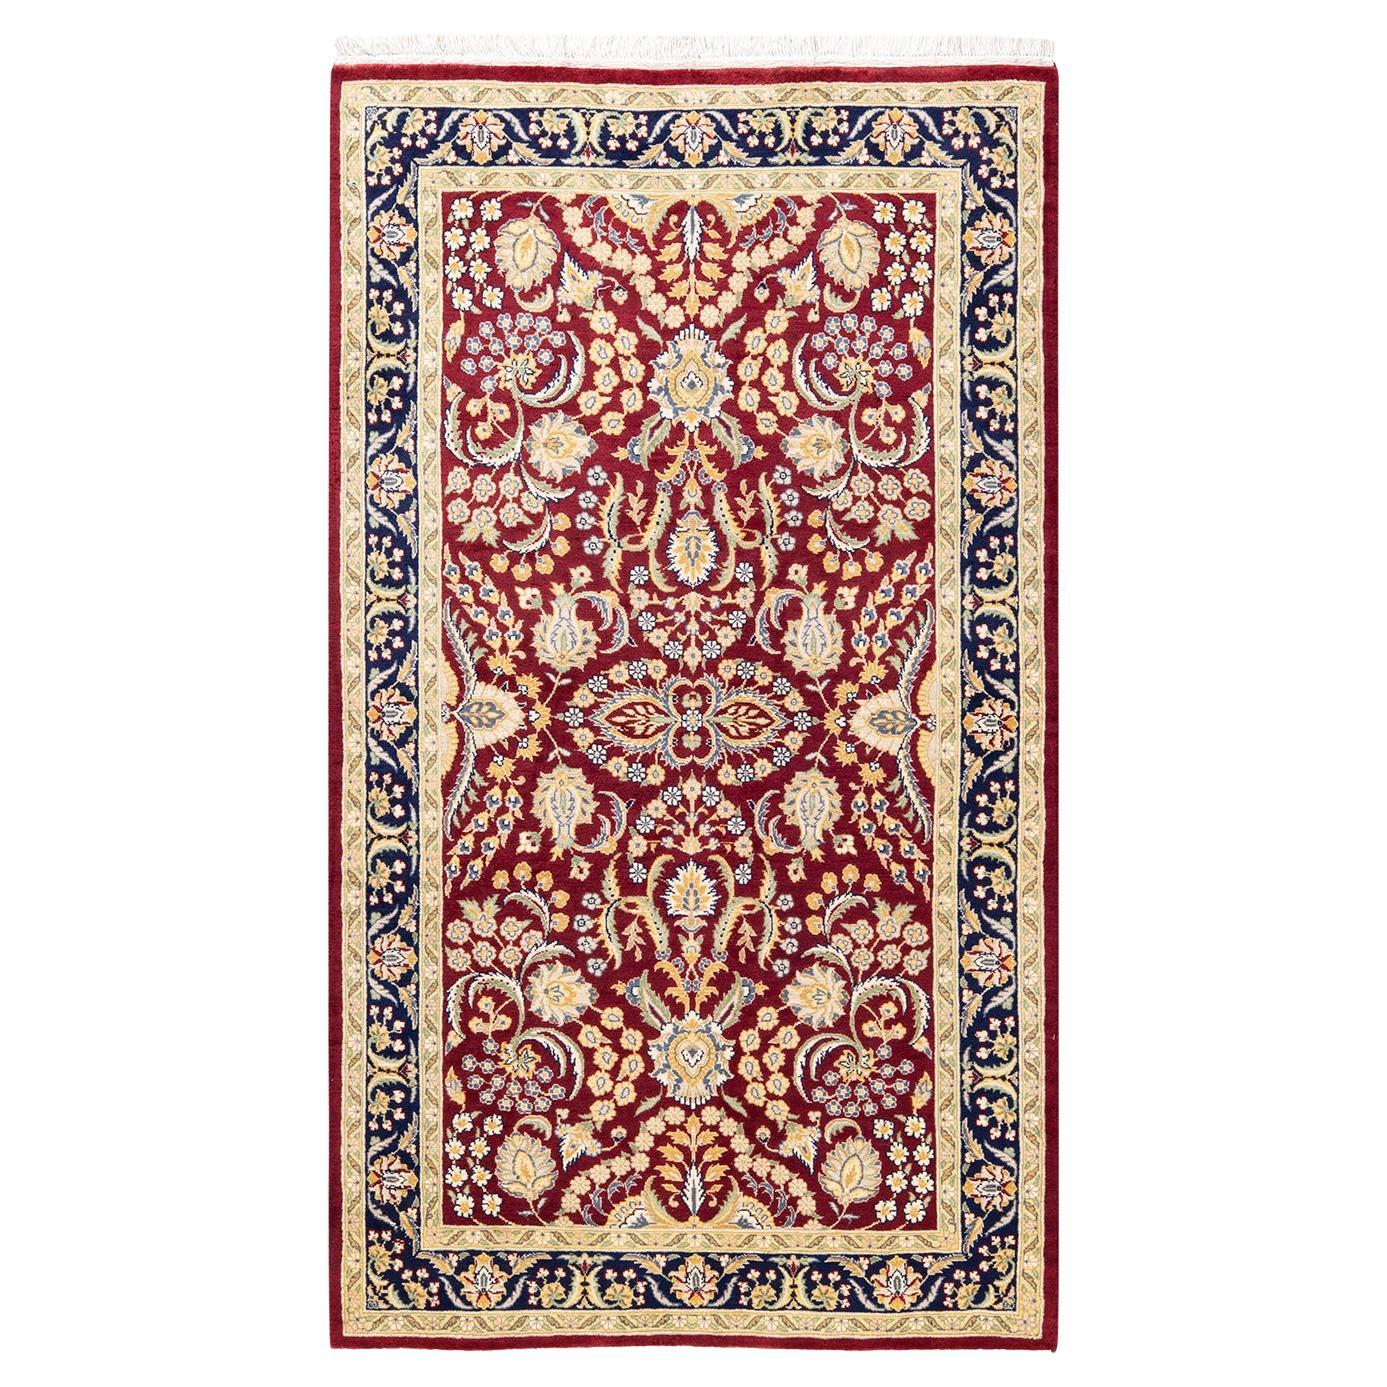 Traditioneller Mogul-Teppich aus handgeknüpfter Wolle in Rot